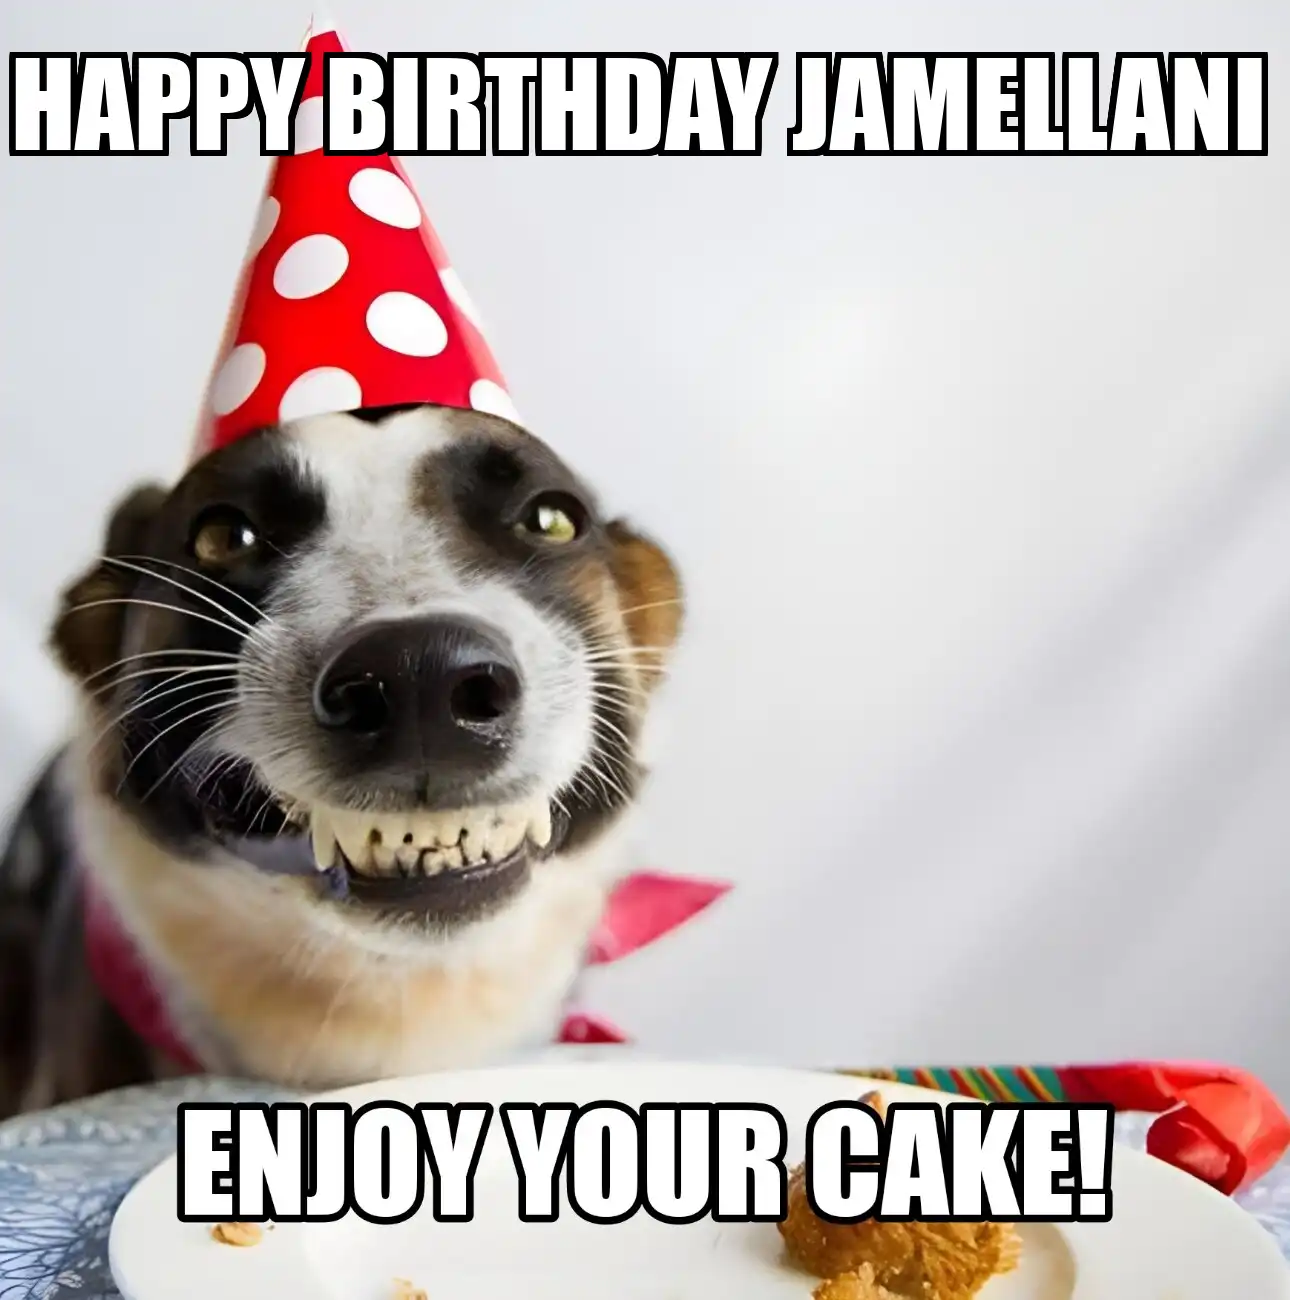 Happy Birthday Jamellani Enjoy Your Cake Dog Meme